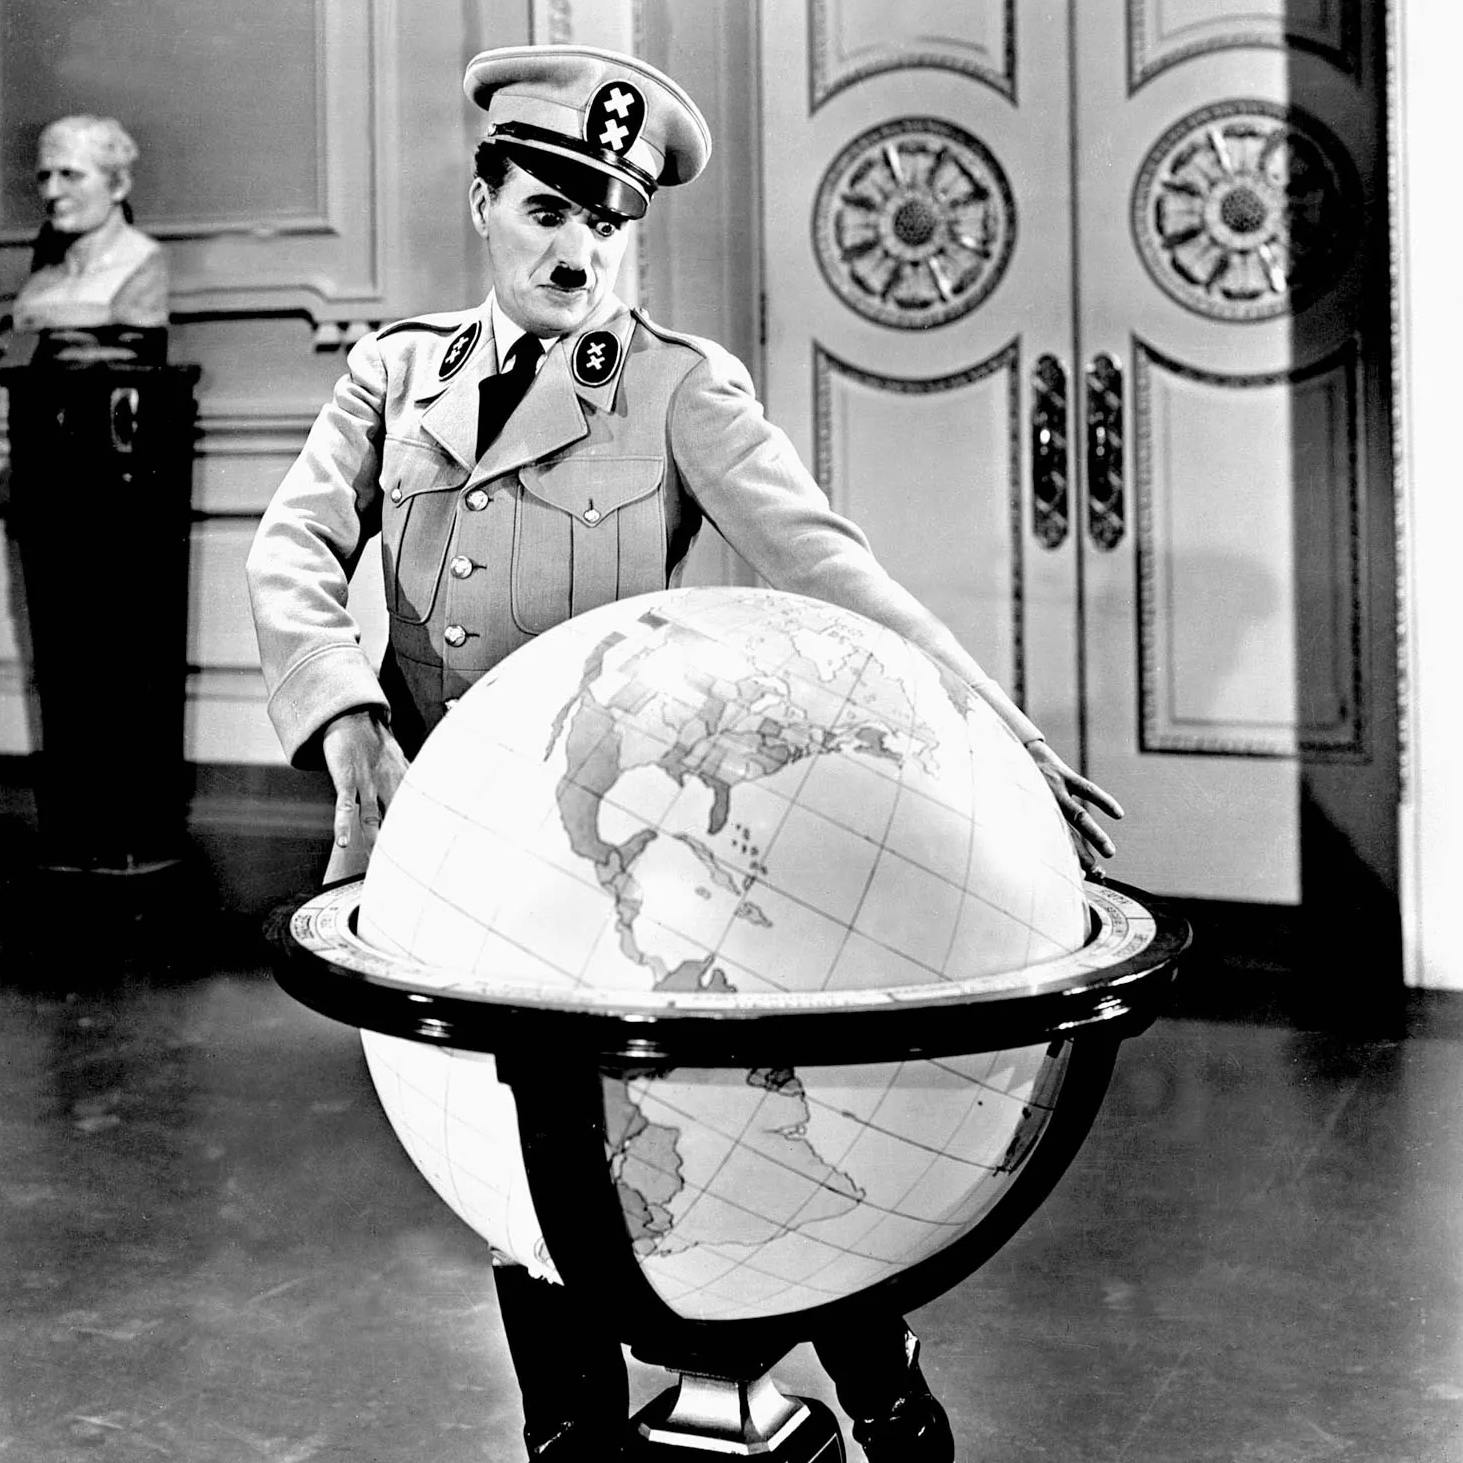 Blacklist Flashback: Charlie Chaplin During World War II